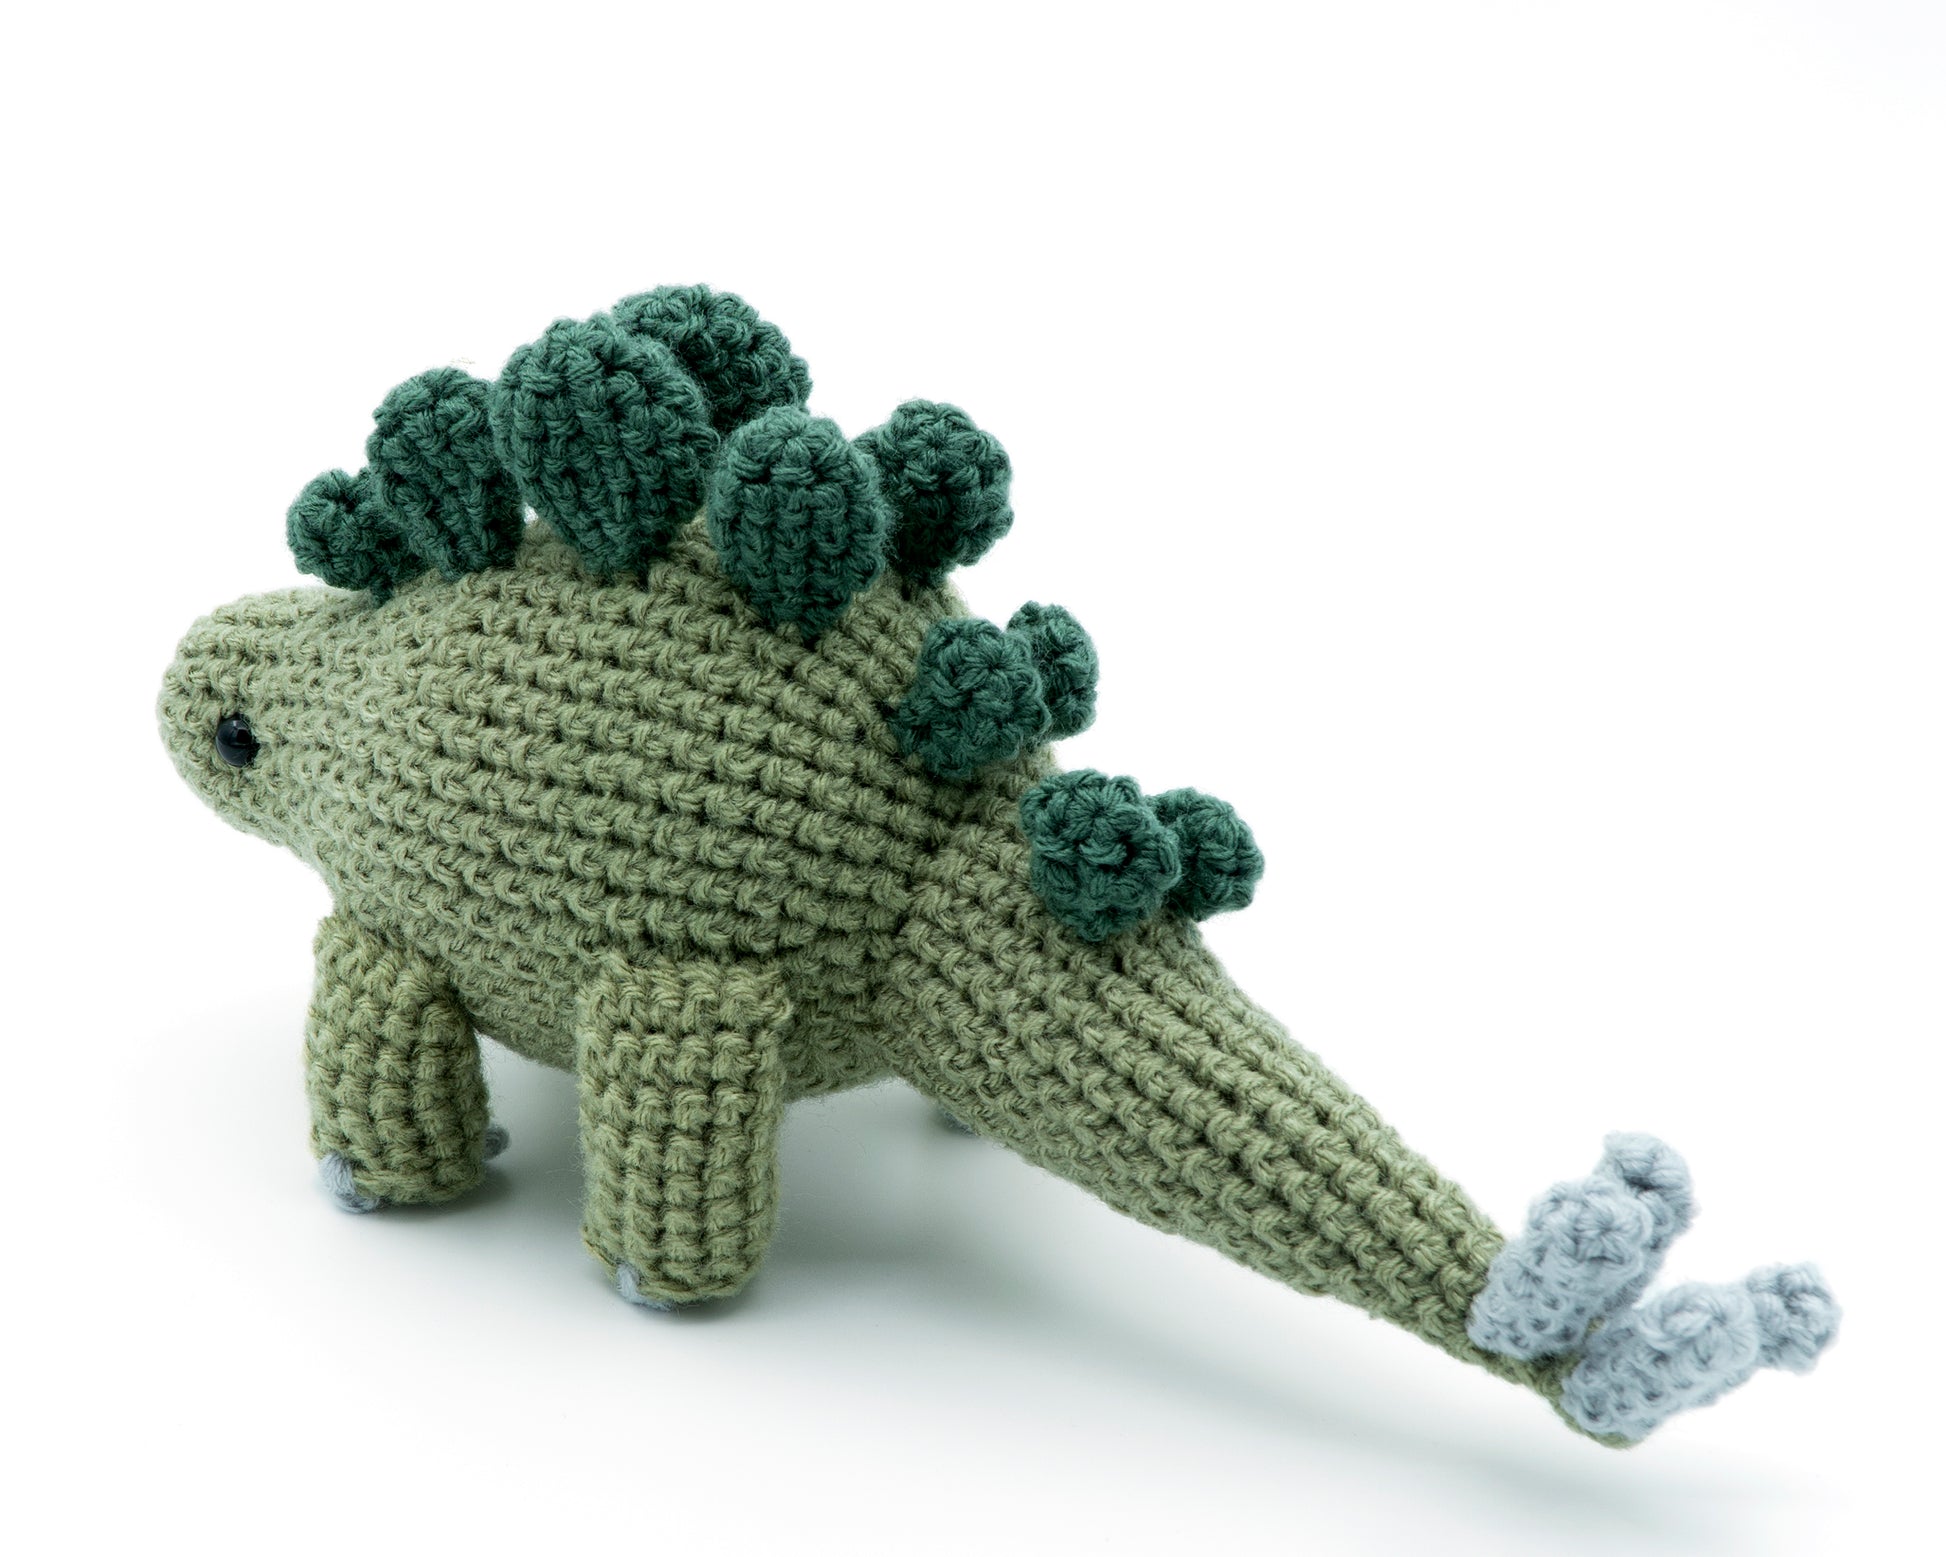 amigurumi crochet stegosaurus pattern view of tail spikes